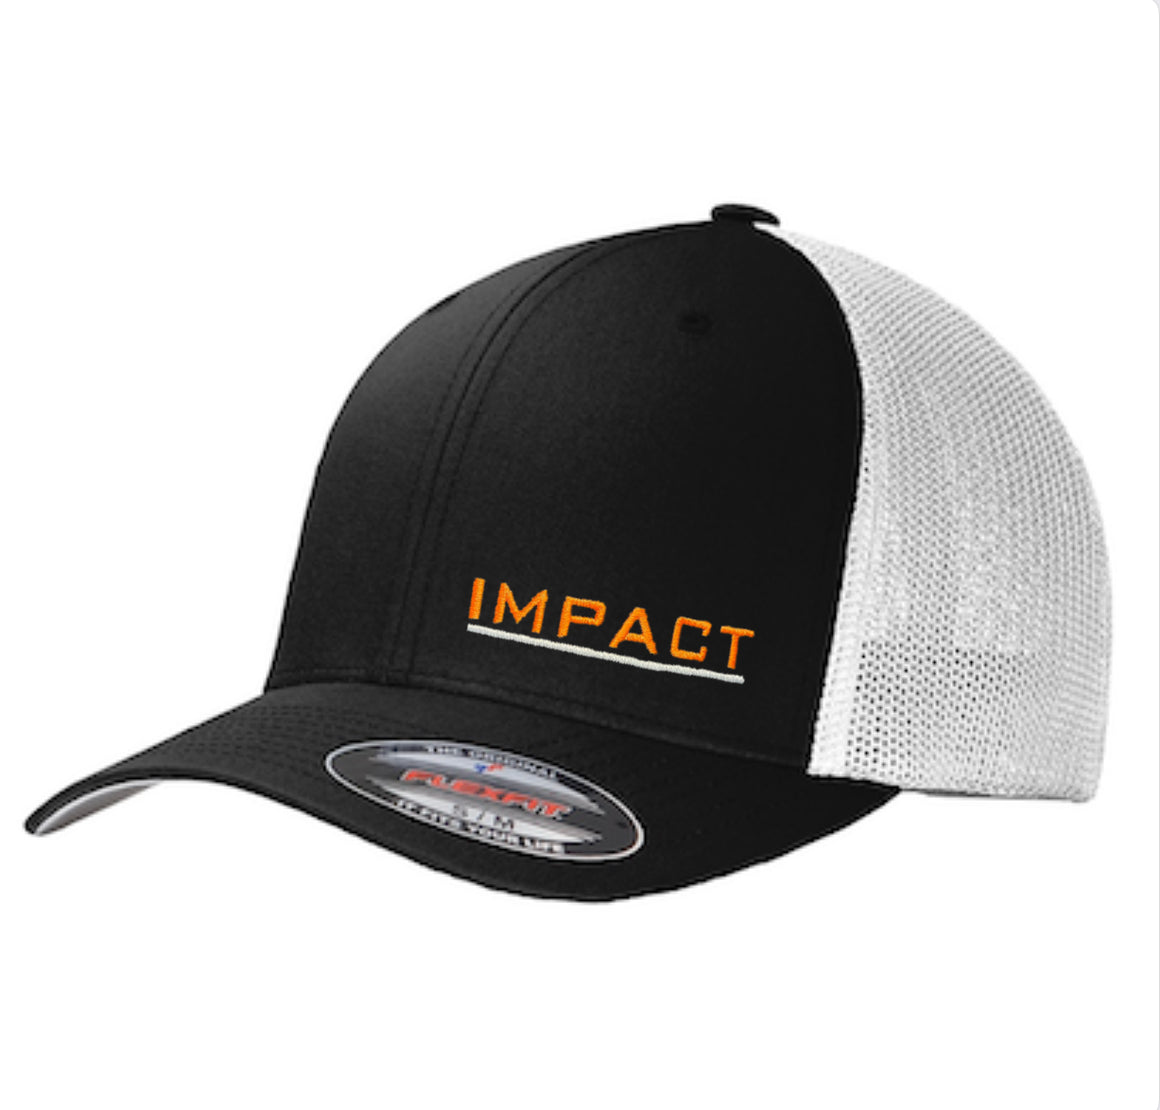 Impact Black Flexfit Hat - White Mesh Back